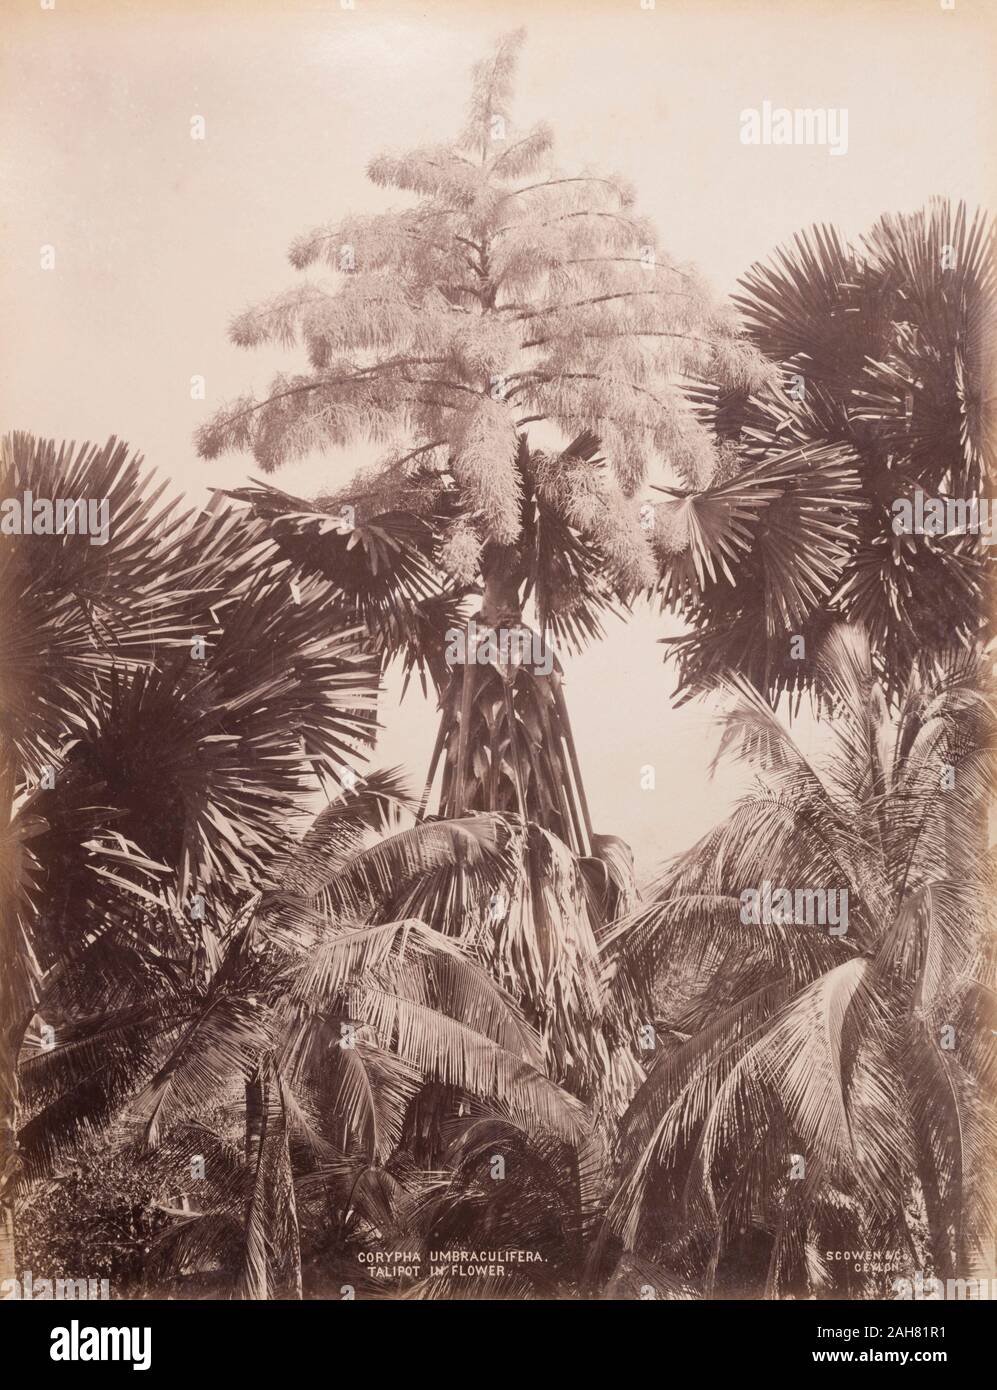 CeylonSri Lanka, Botanical study of Corypha Umbraculifera, the Talipot Palm, in flower, probably growing in Peradeniya Botanic Gardens, Kandy.Printed caption: CORYPHA UMBRACULIFERA. TALIPOT IN FLOWER.SCOWEN & Co. CEYLON.Original manuscript caption: Corypha Umbraculifera. Talipot (in flower). Ceylon, circa 1885. 2003/071/1/1/2/21. Stock Photo